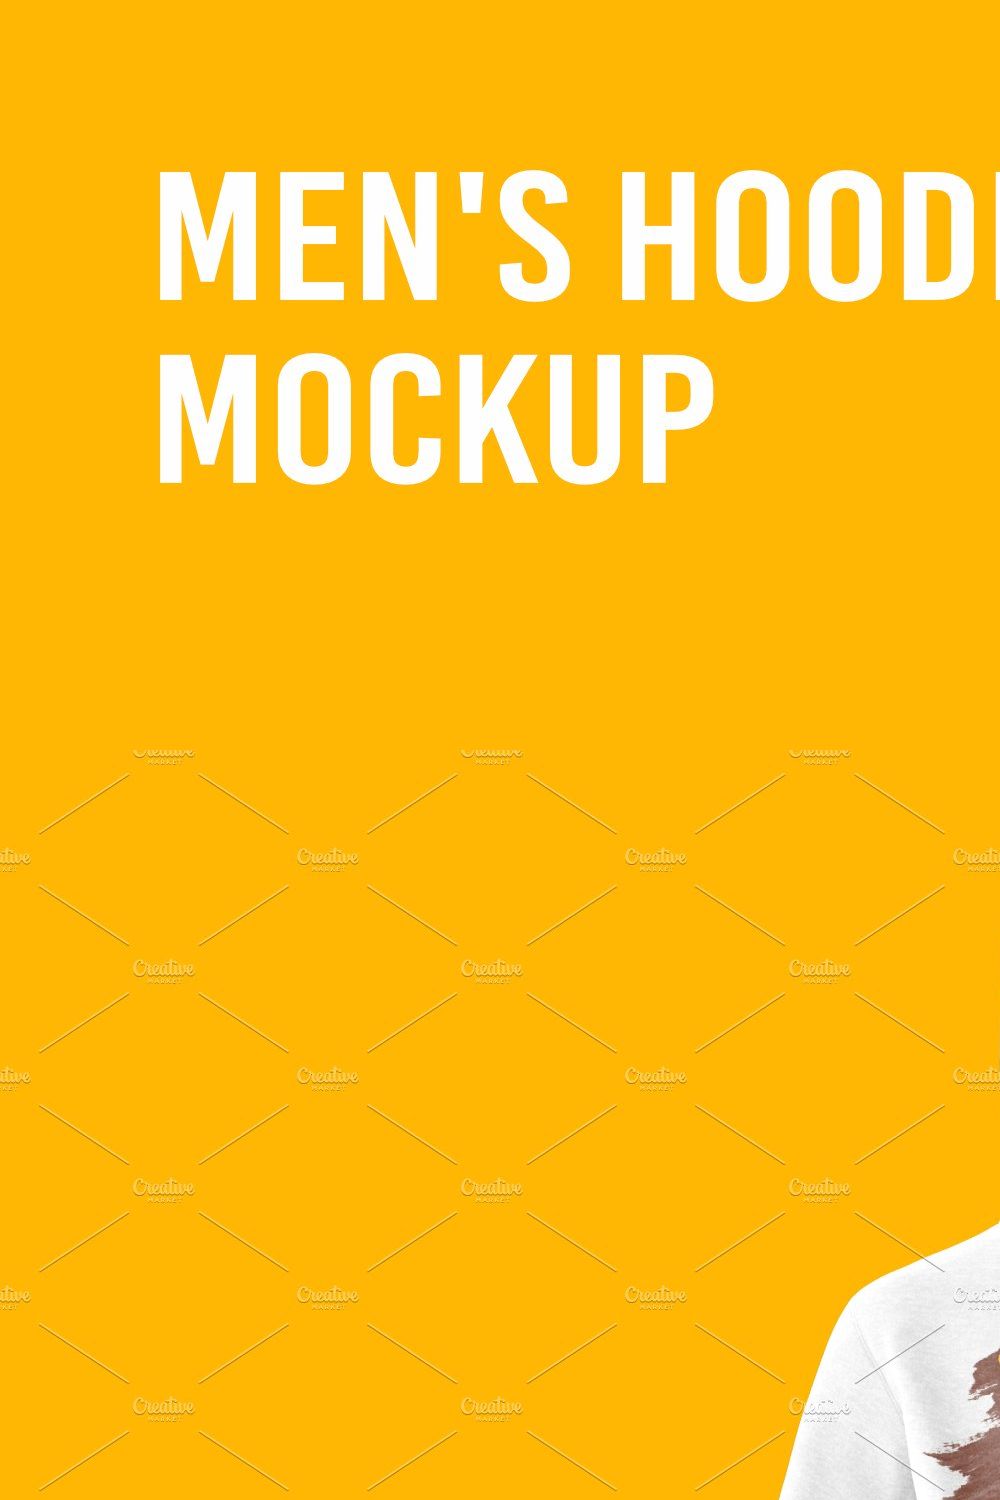 Men's Hoodies Mockup pinterest preview image.